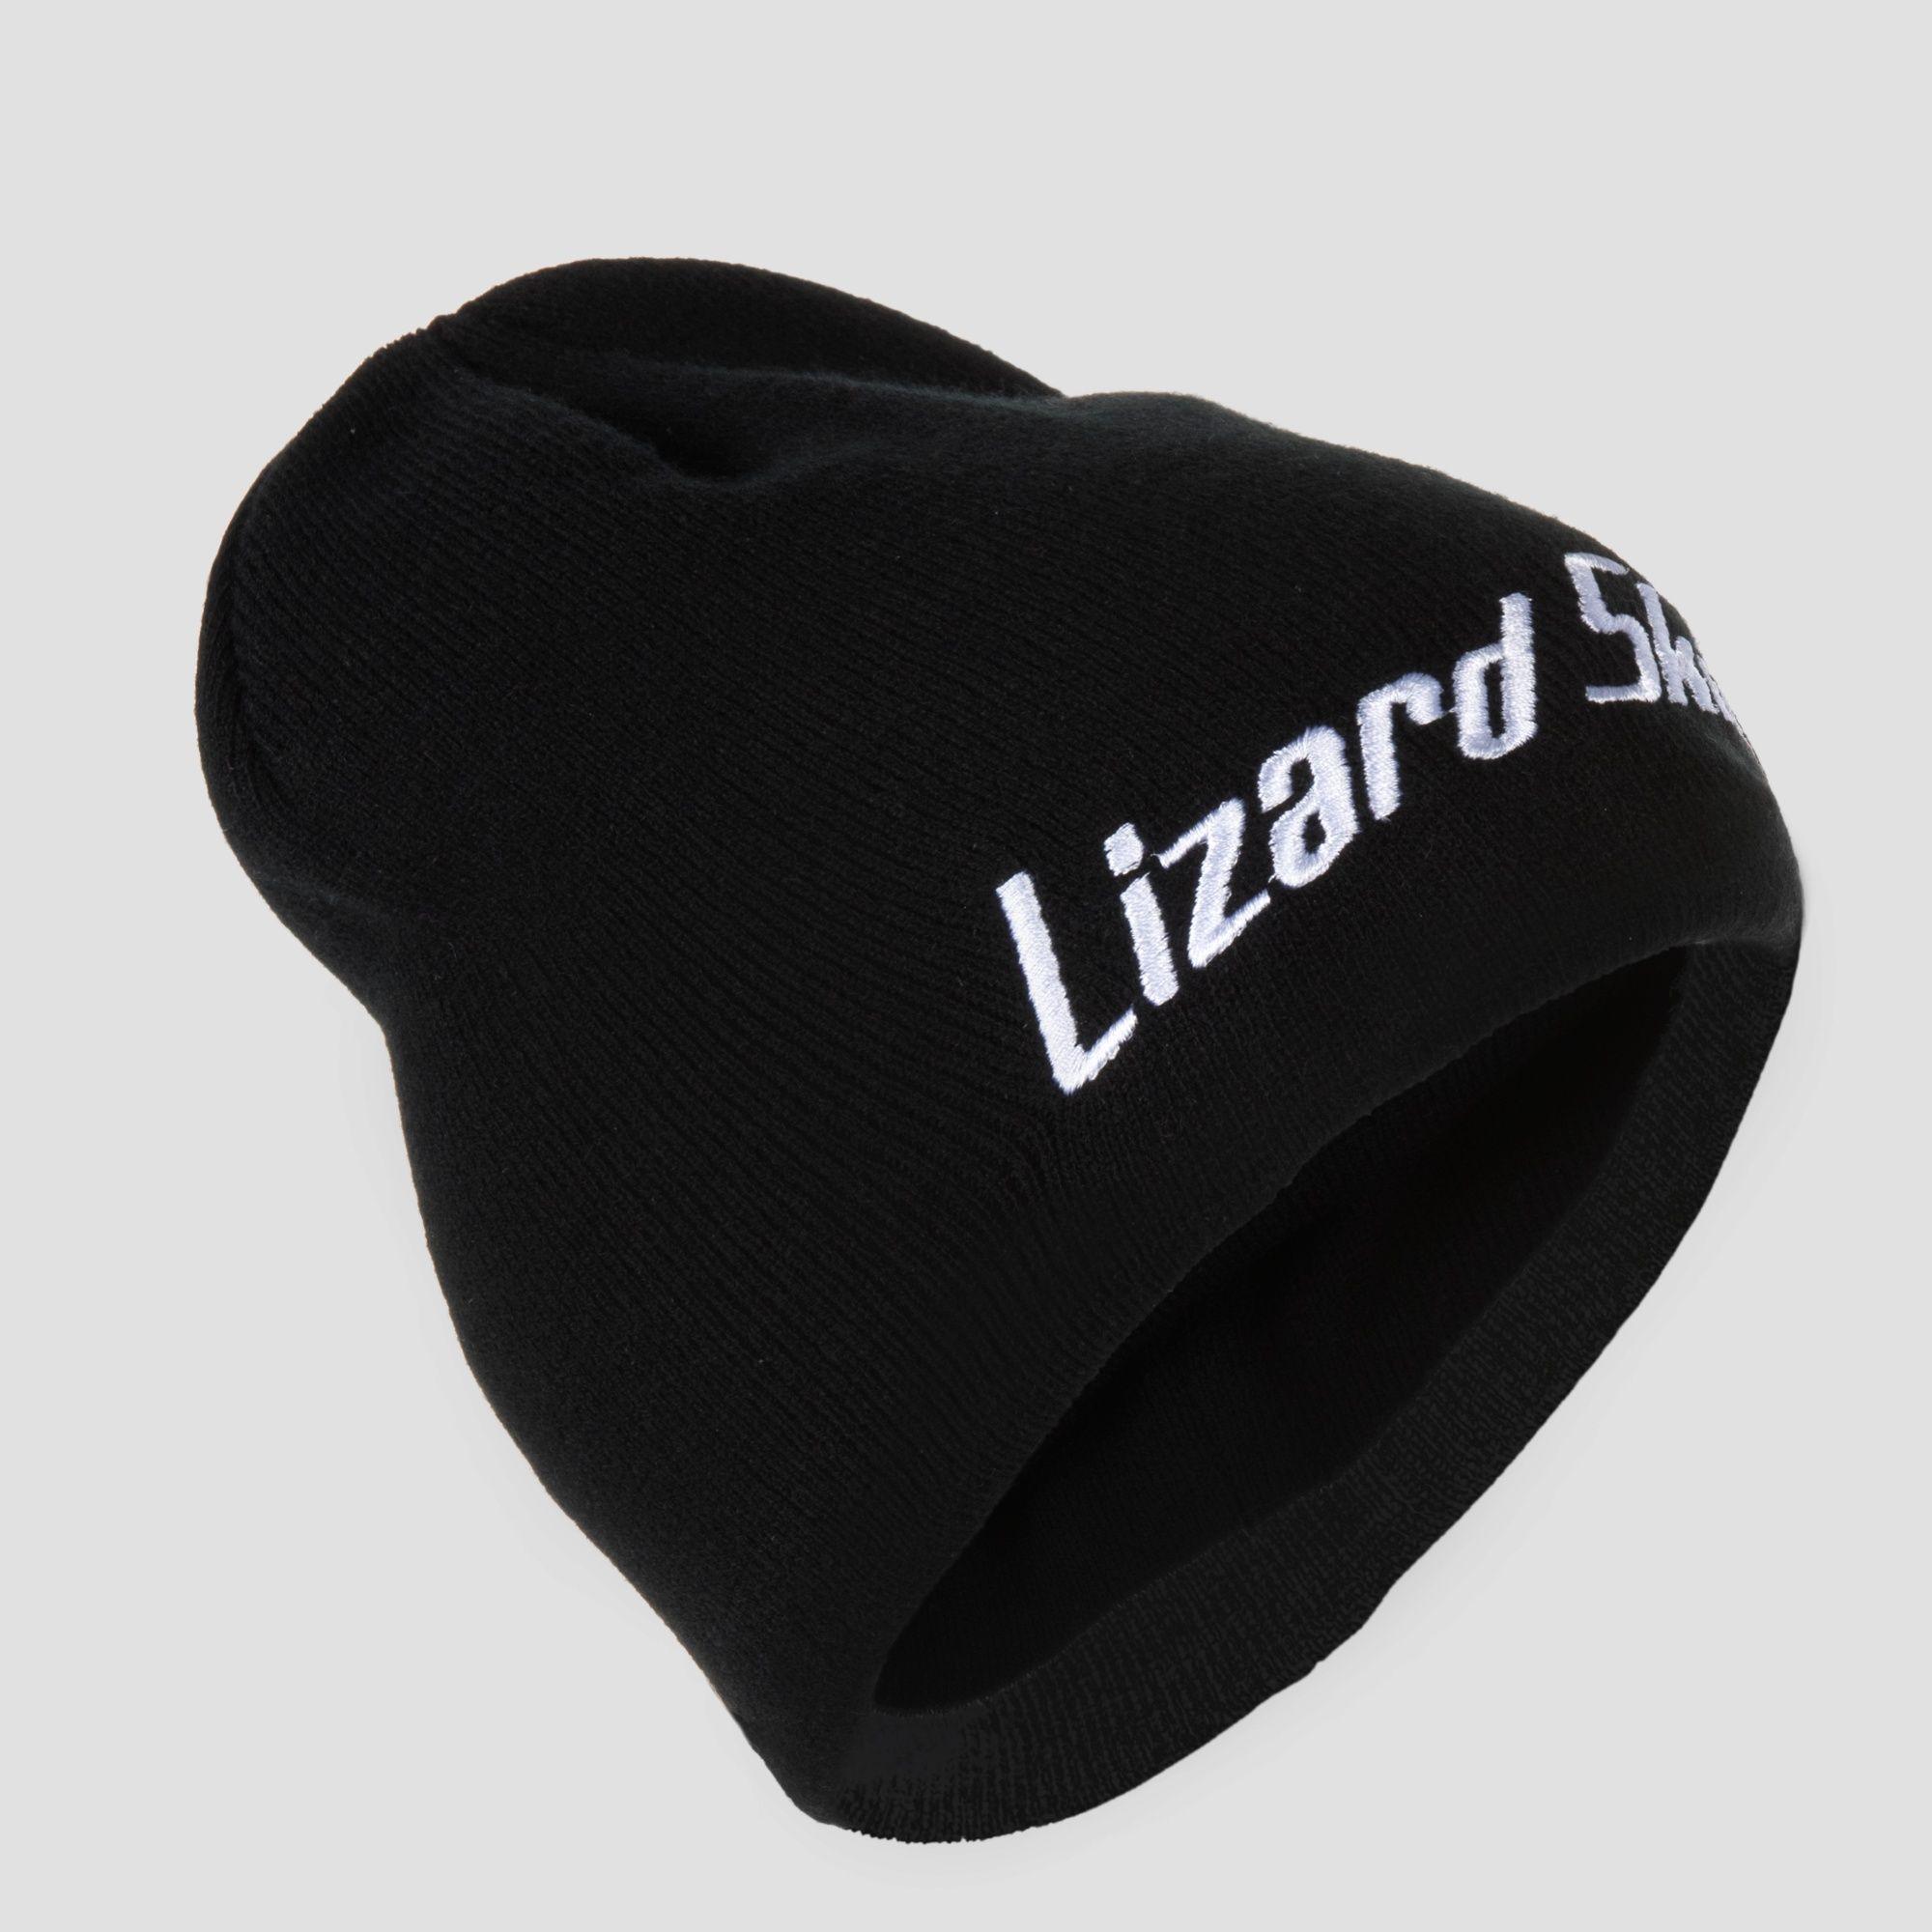 Lizard Sports Logo - Lizard Skins Sports | Lizard Skins Beanie - Black Text Logo